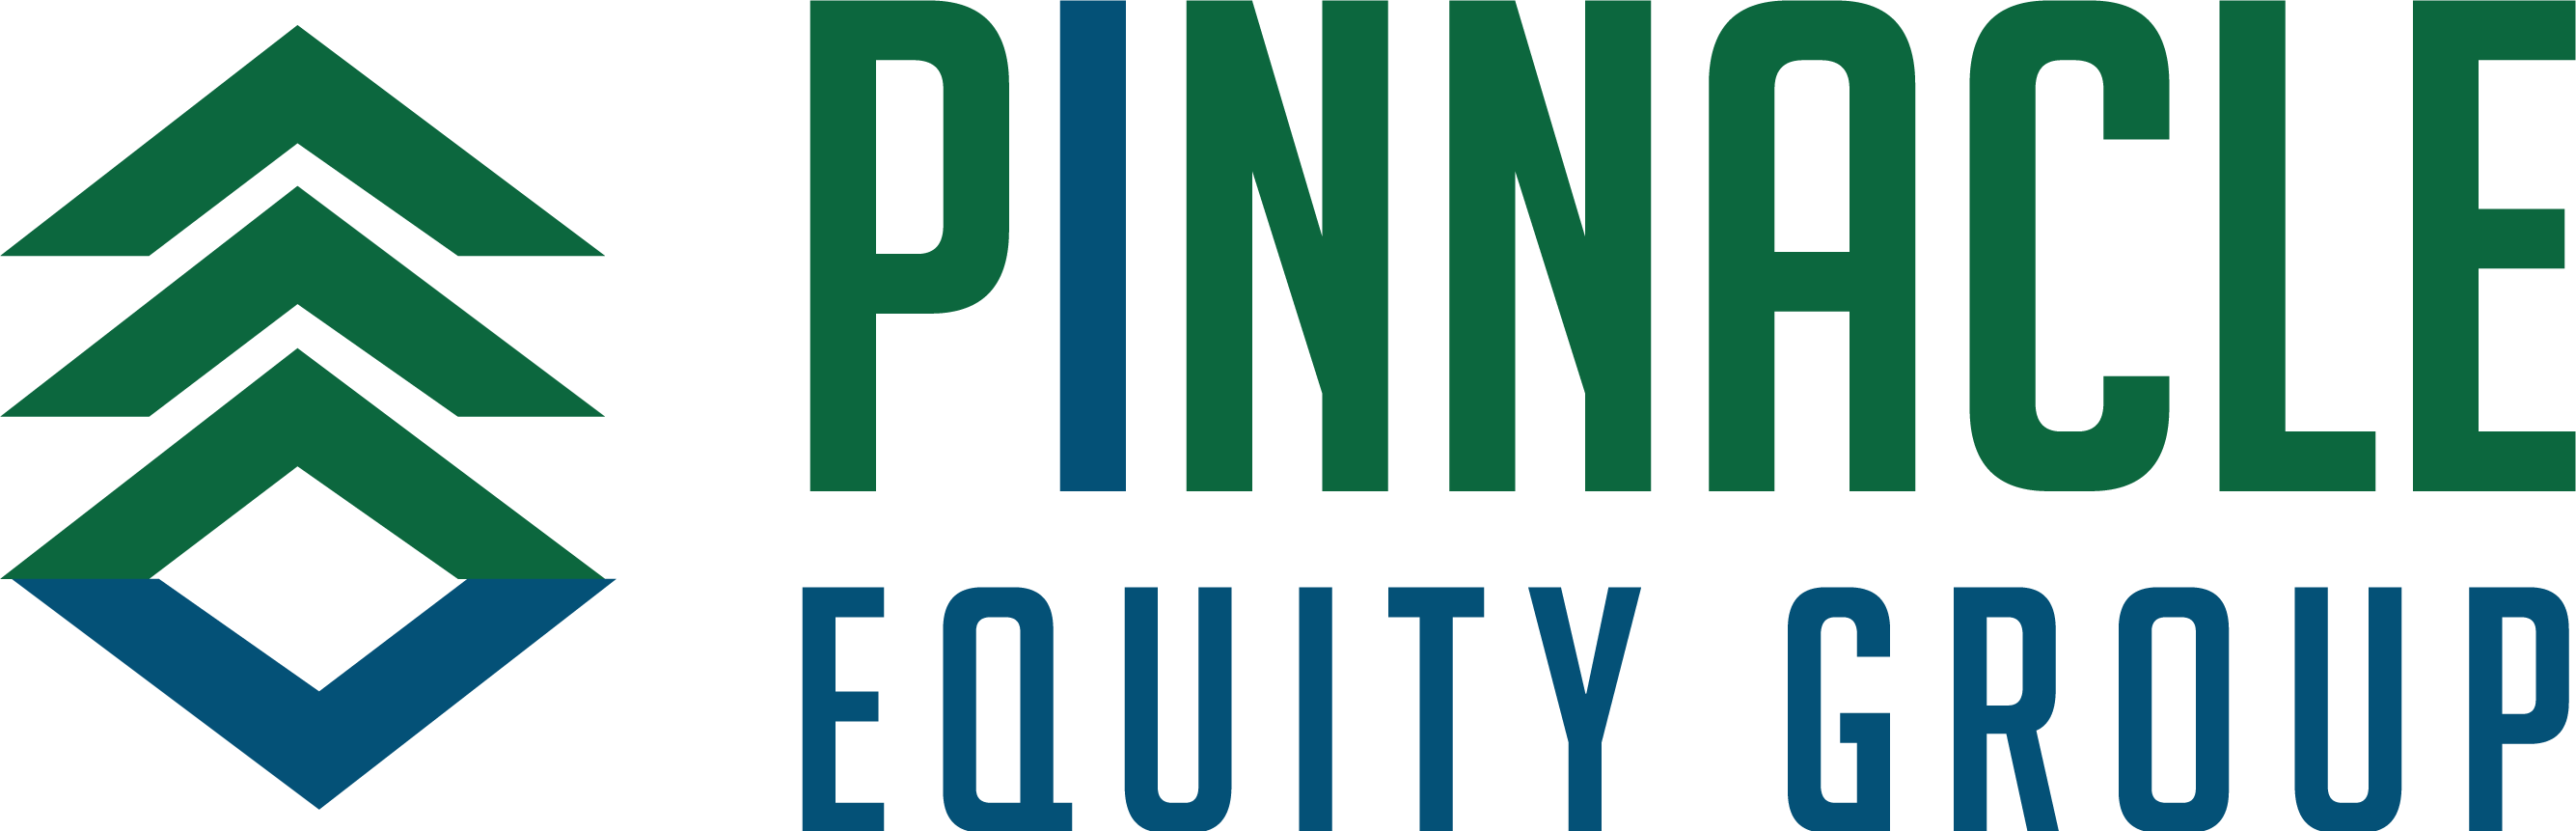 Pinnacle Equity Group Logo